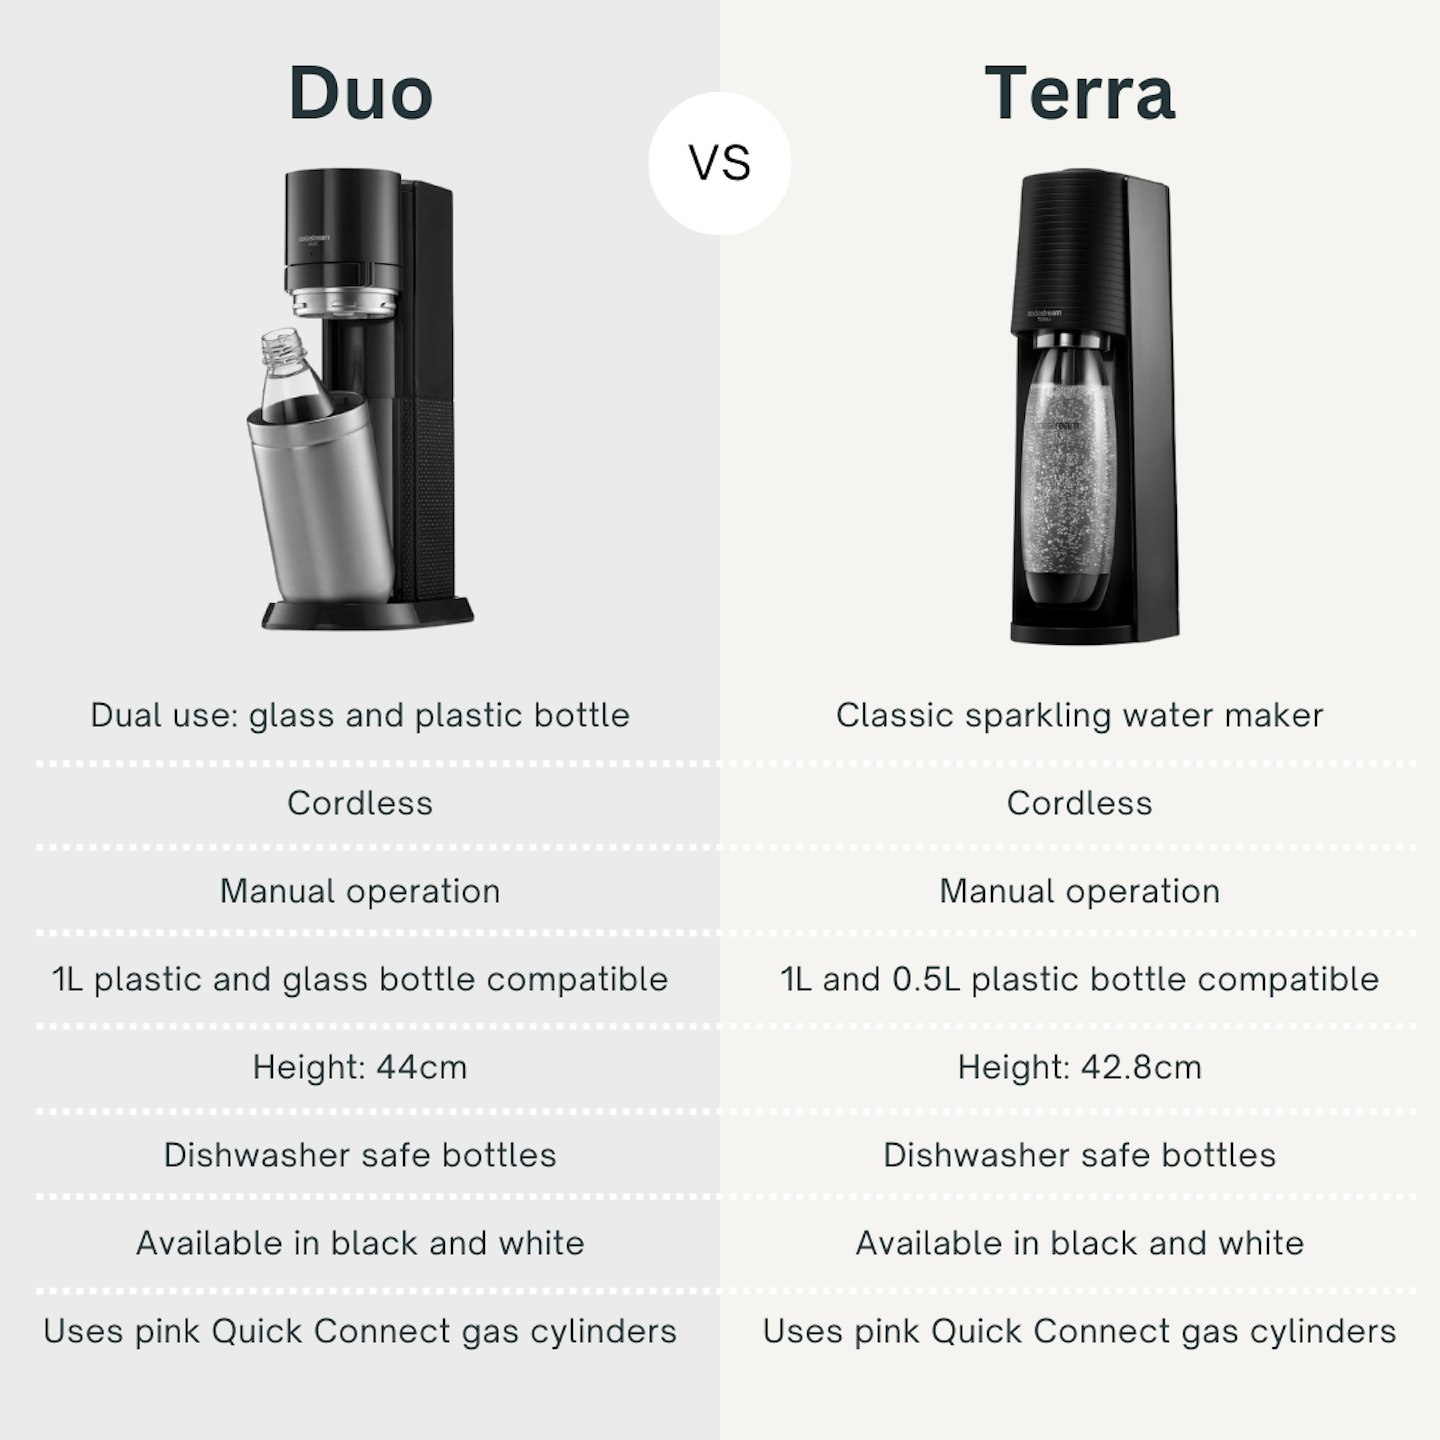 SodaStream Duo vs. SodaStream Terra